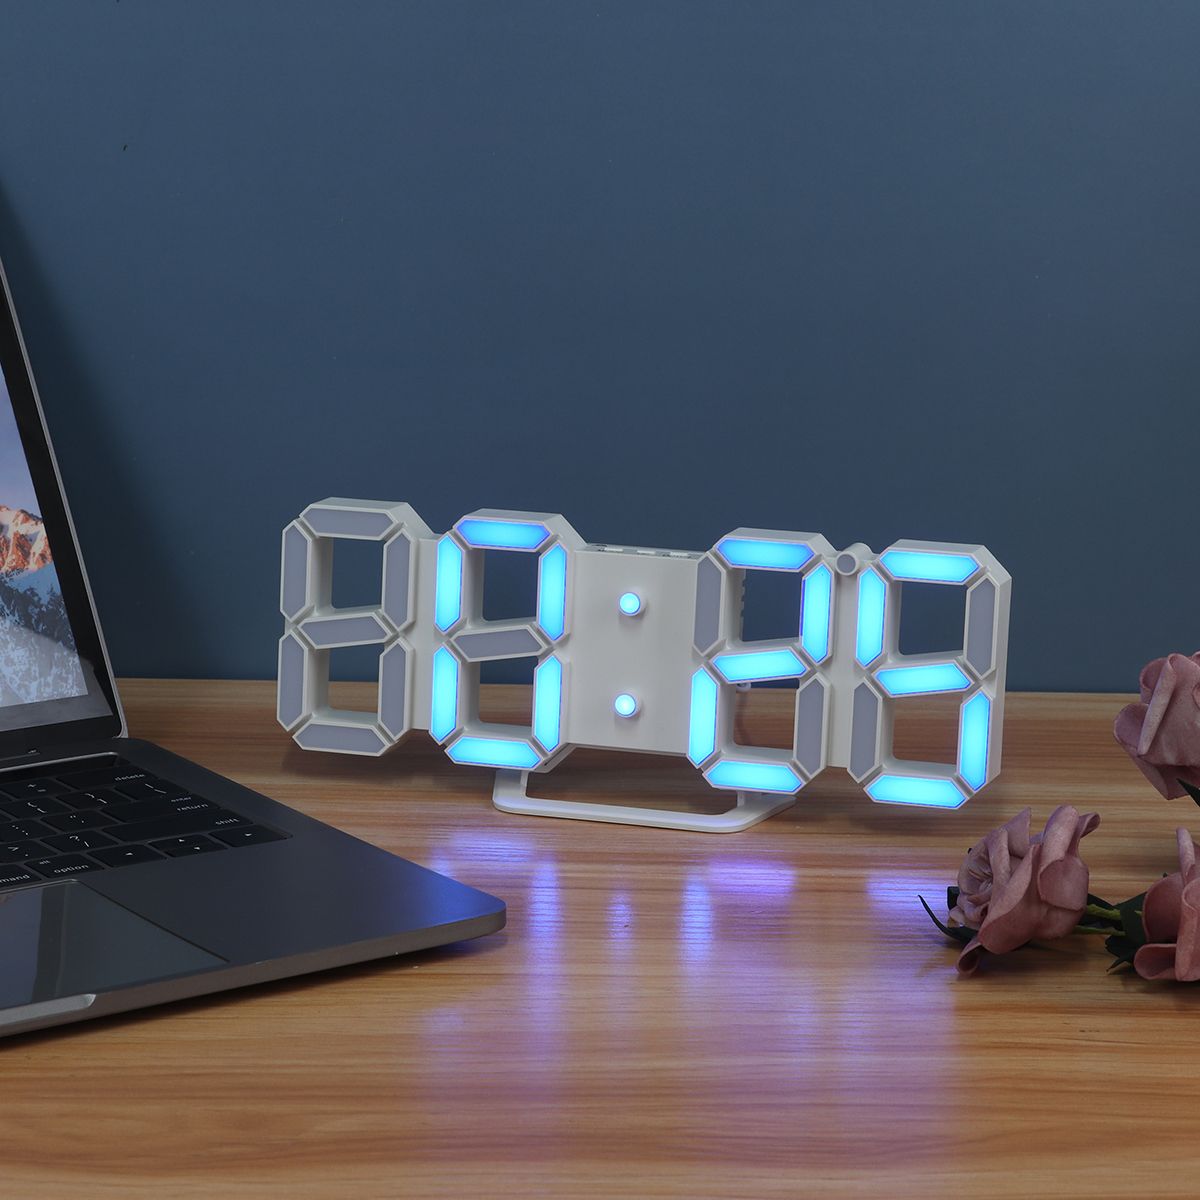 3D-Alarm-Clock-LED-Date-Display-Digital-Temperature-Snooze-Table-Wall-Hanging-1640277